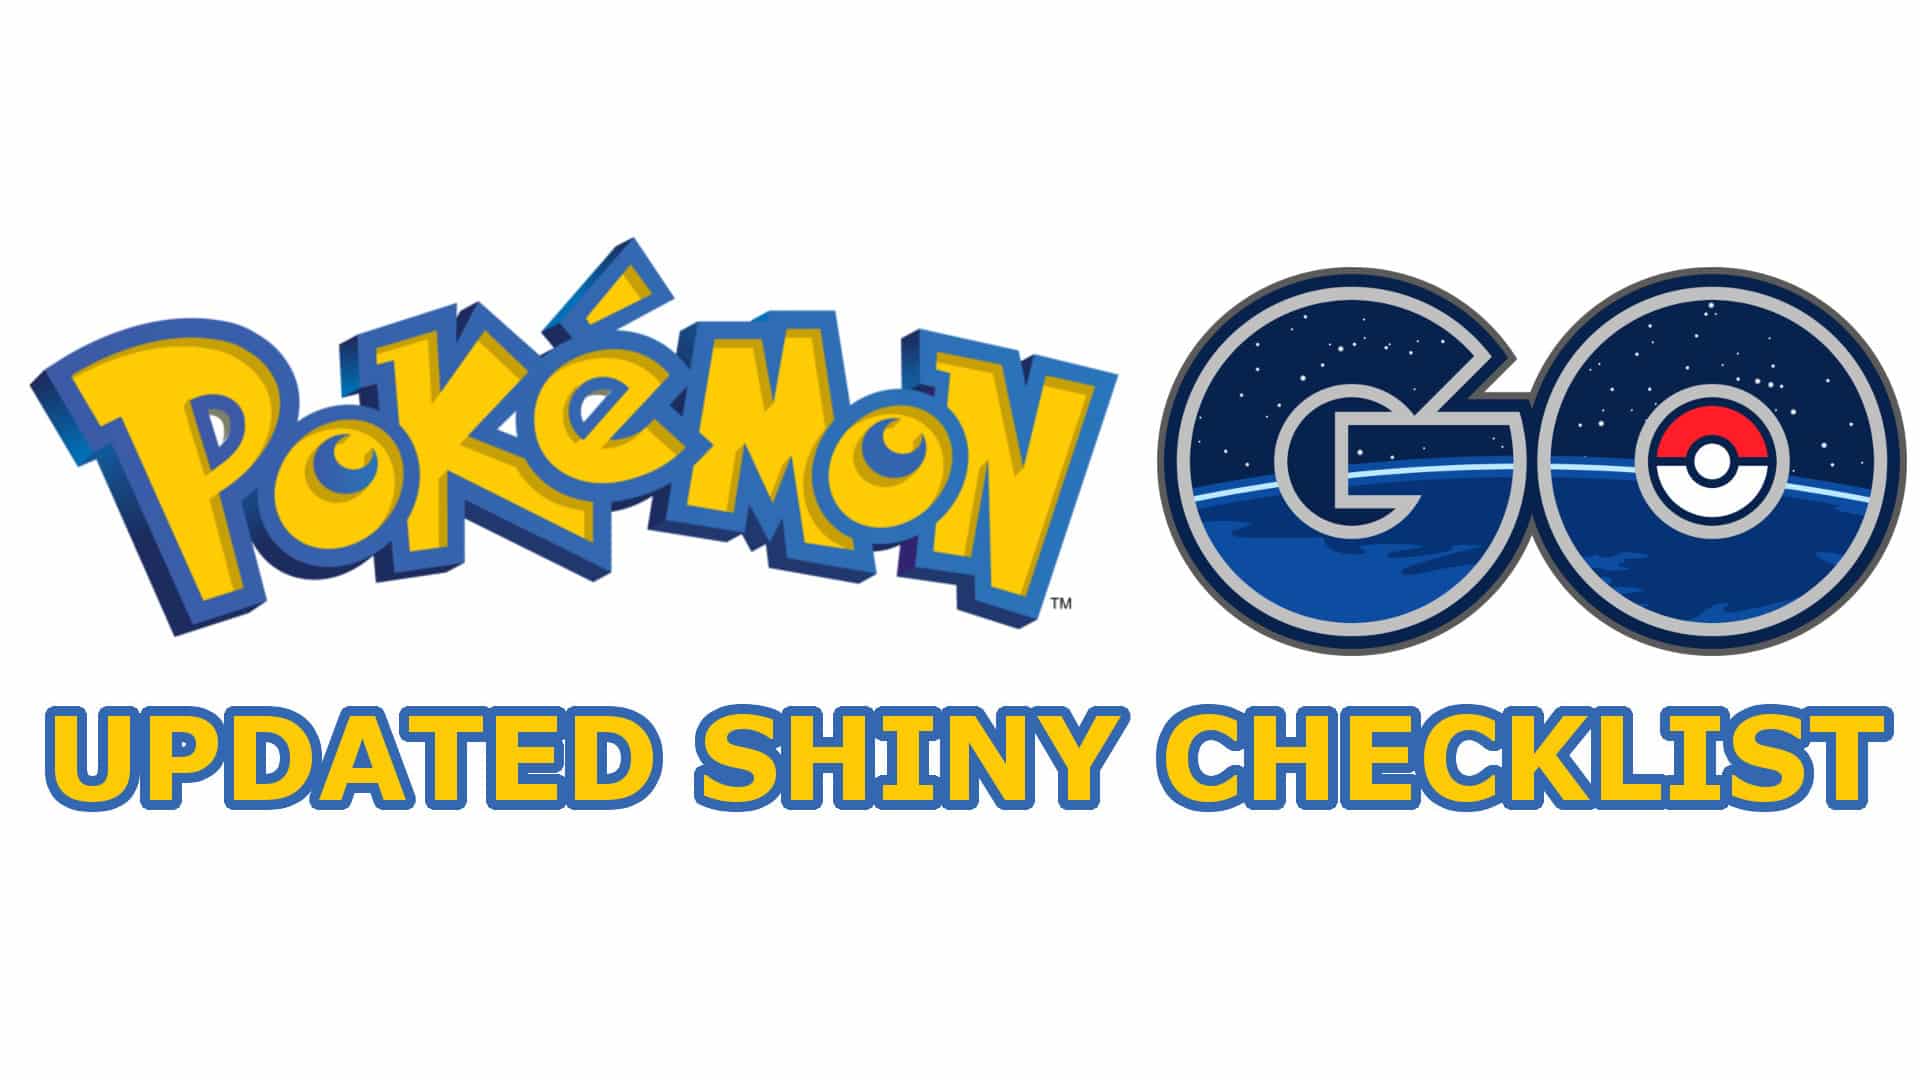 Updated Checklist Of All Shiny Pokemon In Pokemon Go